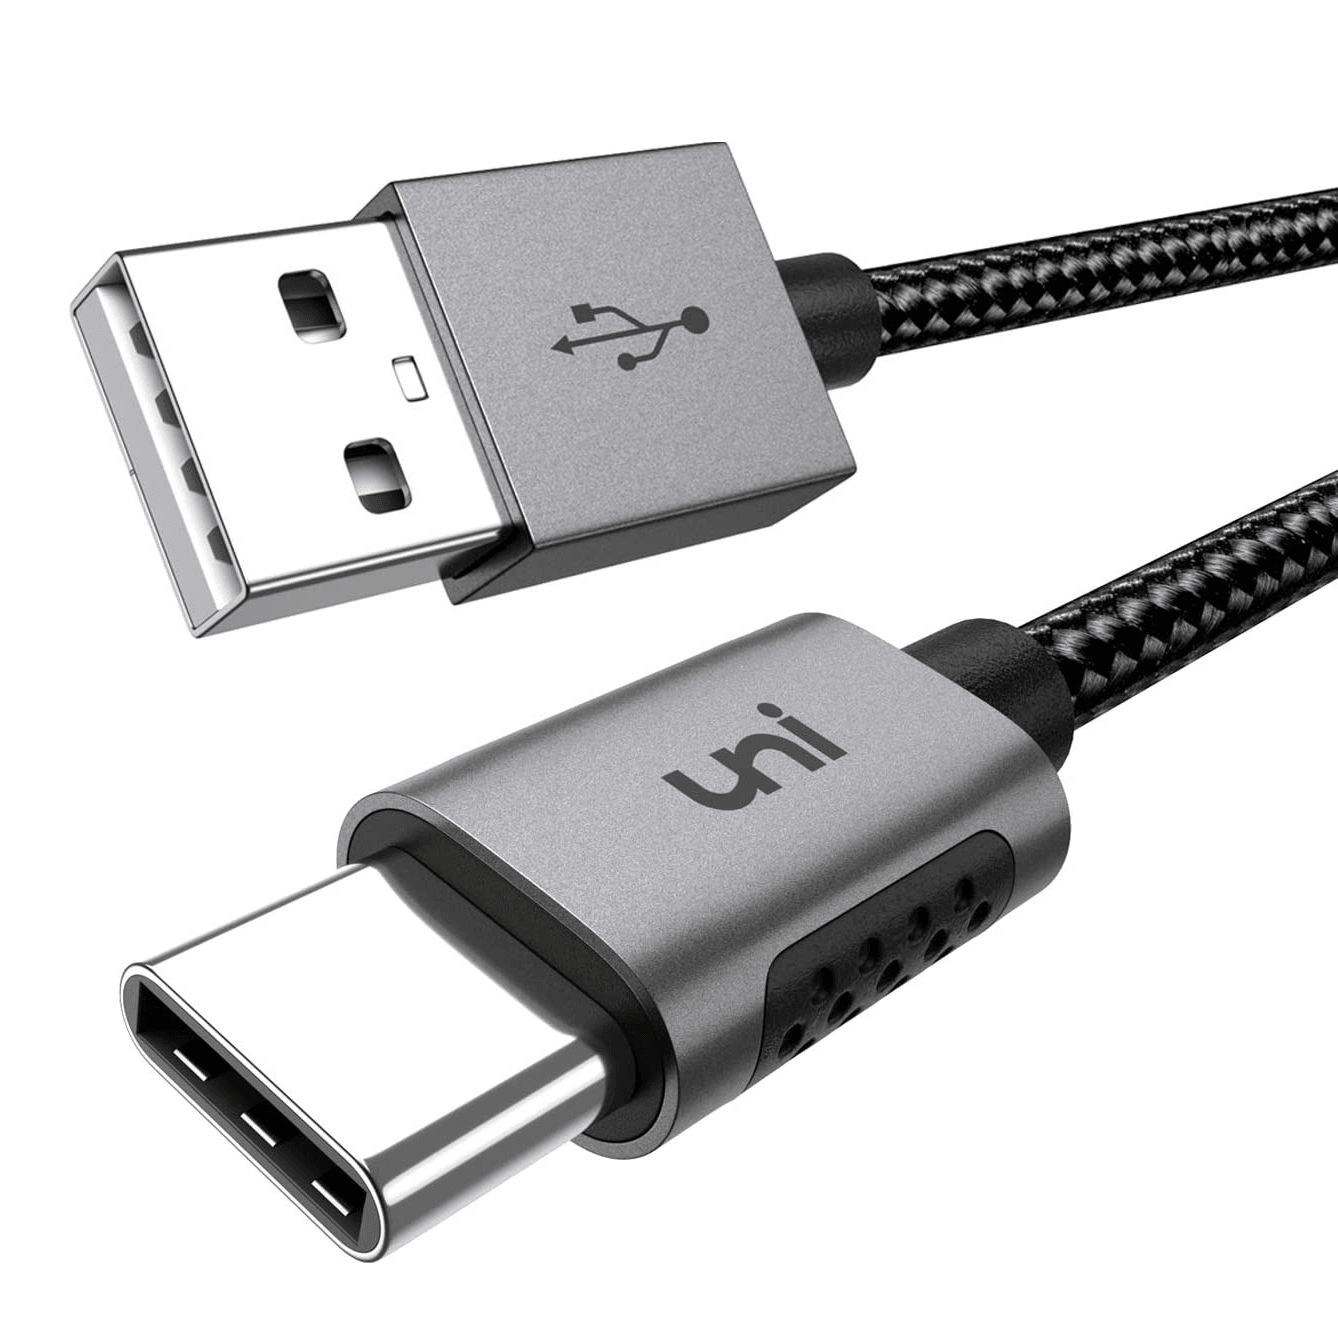 Mevrouw Kent capaciteit uni® USB C Fast Charging Cable, Double Nylon Braided